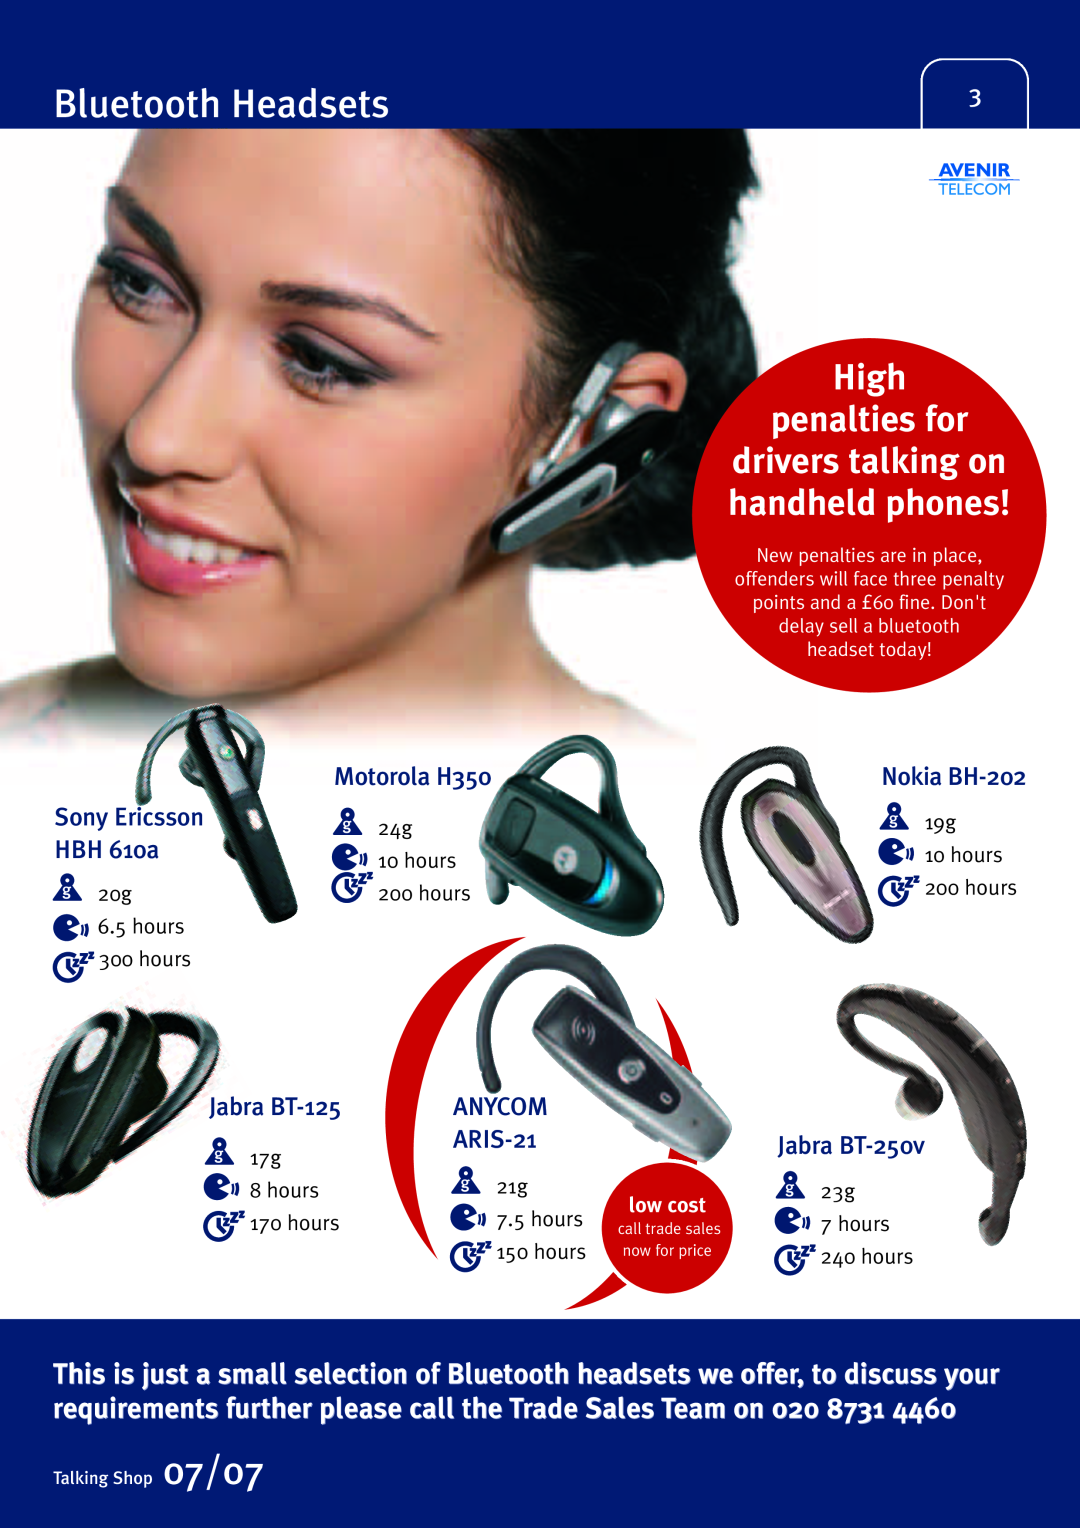 Sony Ericsson W580i Bluetooth Headsets, High penalties for, Motorola H350, Sony Ericsson, HBH 610a, Jabra BT-125, Anycom 